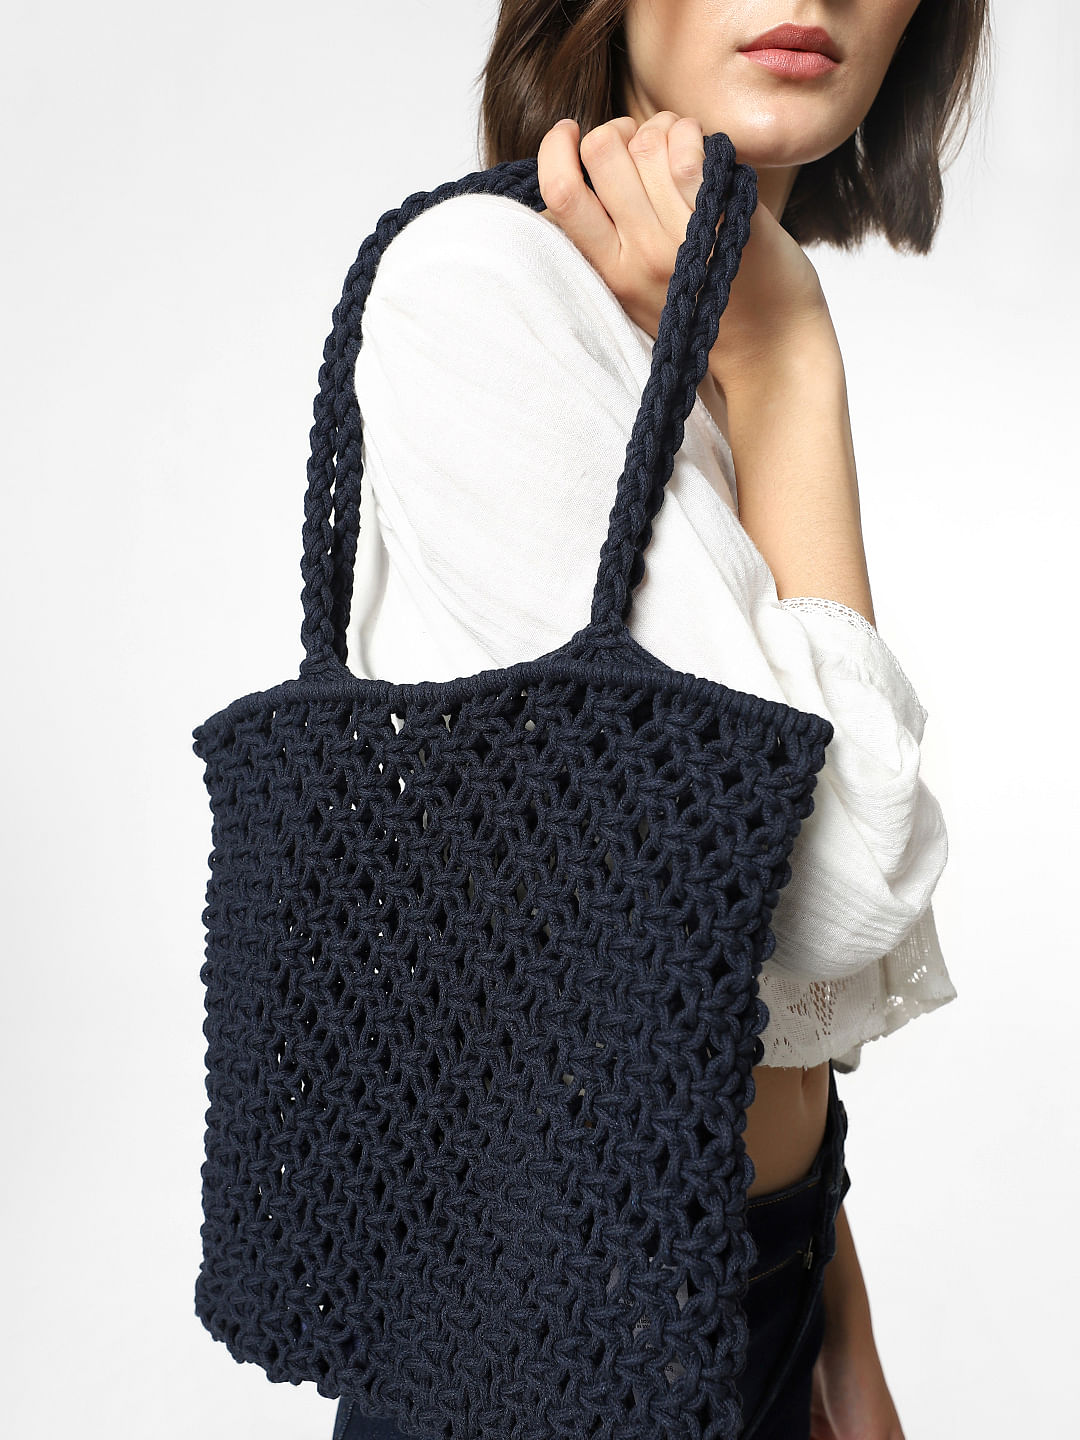 Crochet Handbags Bags - Buy Crochet Handbags Bags online in India